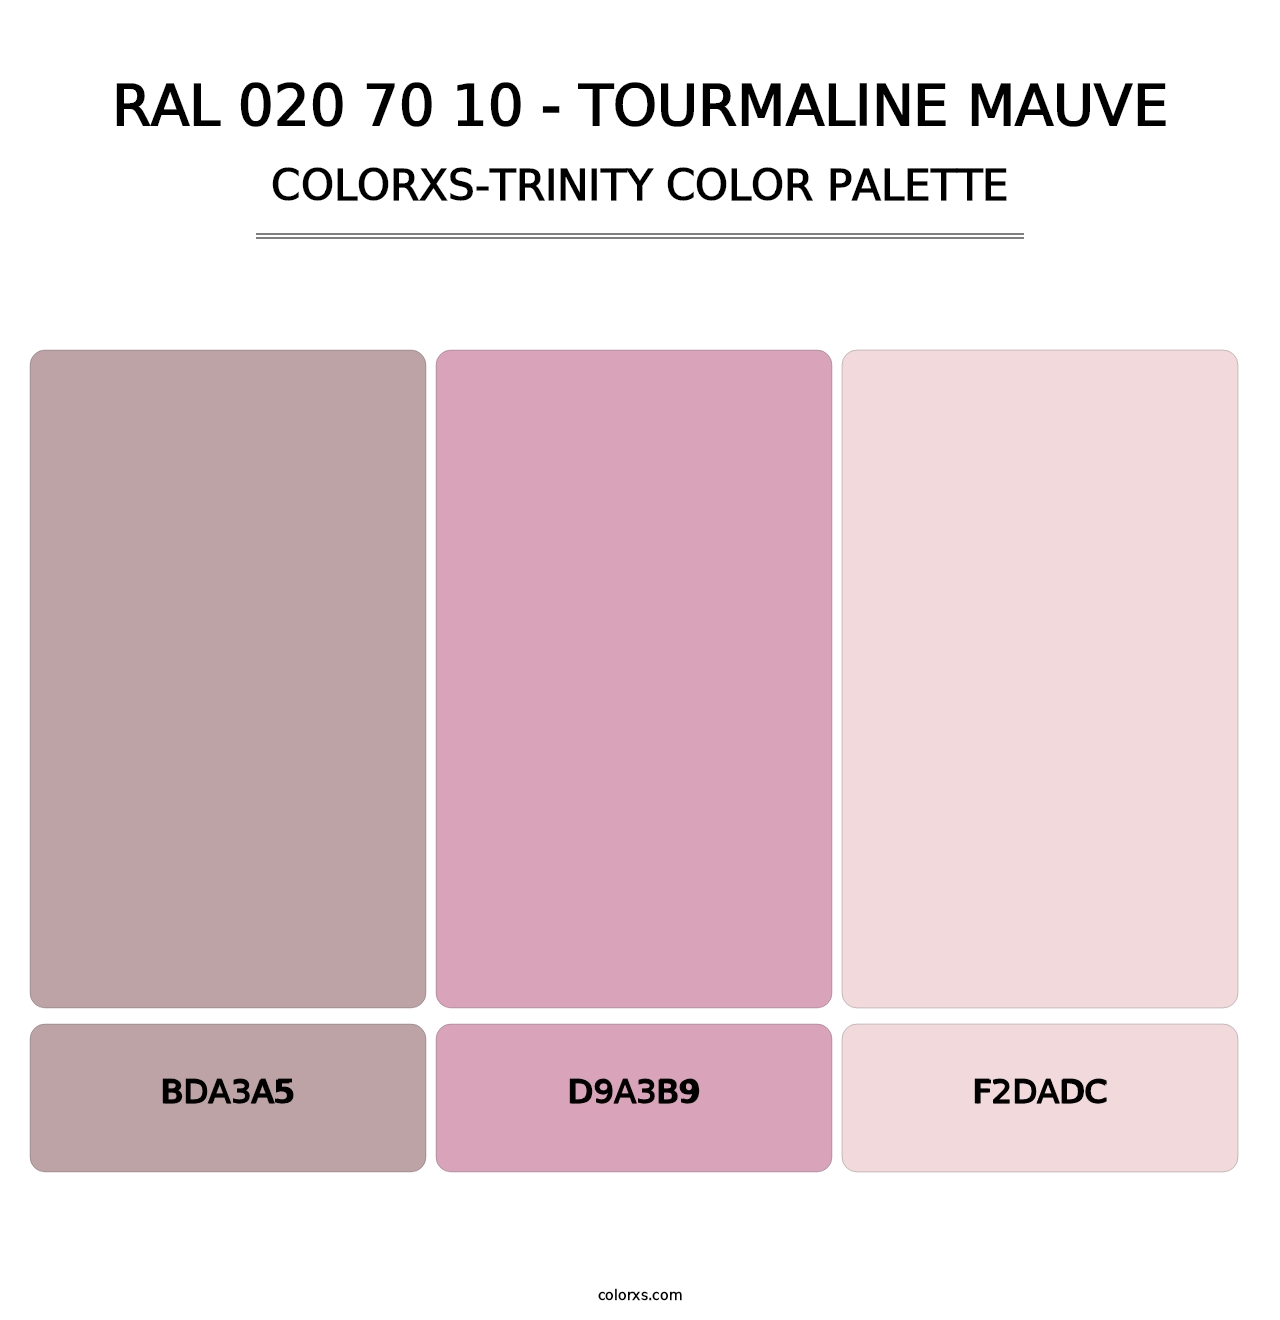 RAL 020 70 10 - Tourmaline Mauve - Colorxs Trinity Palette